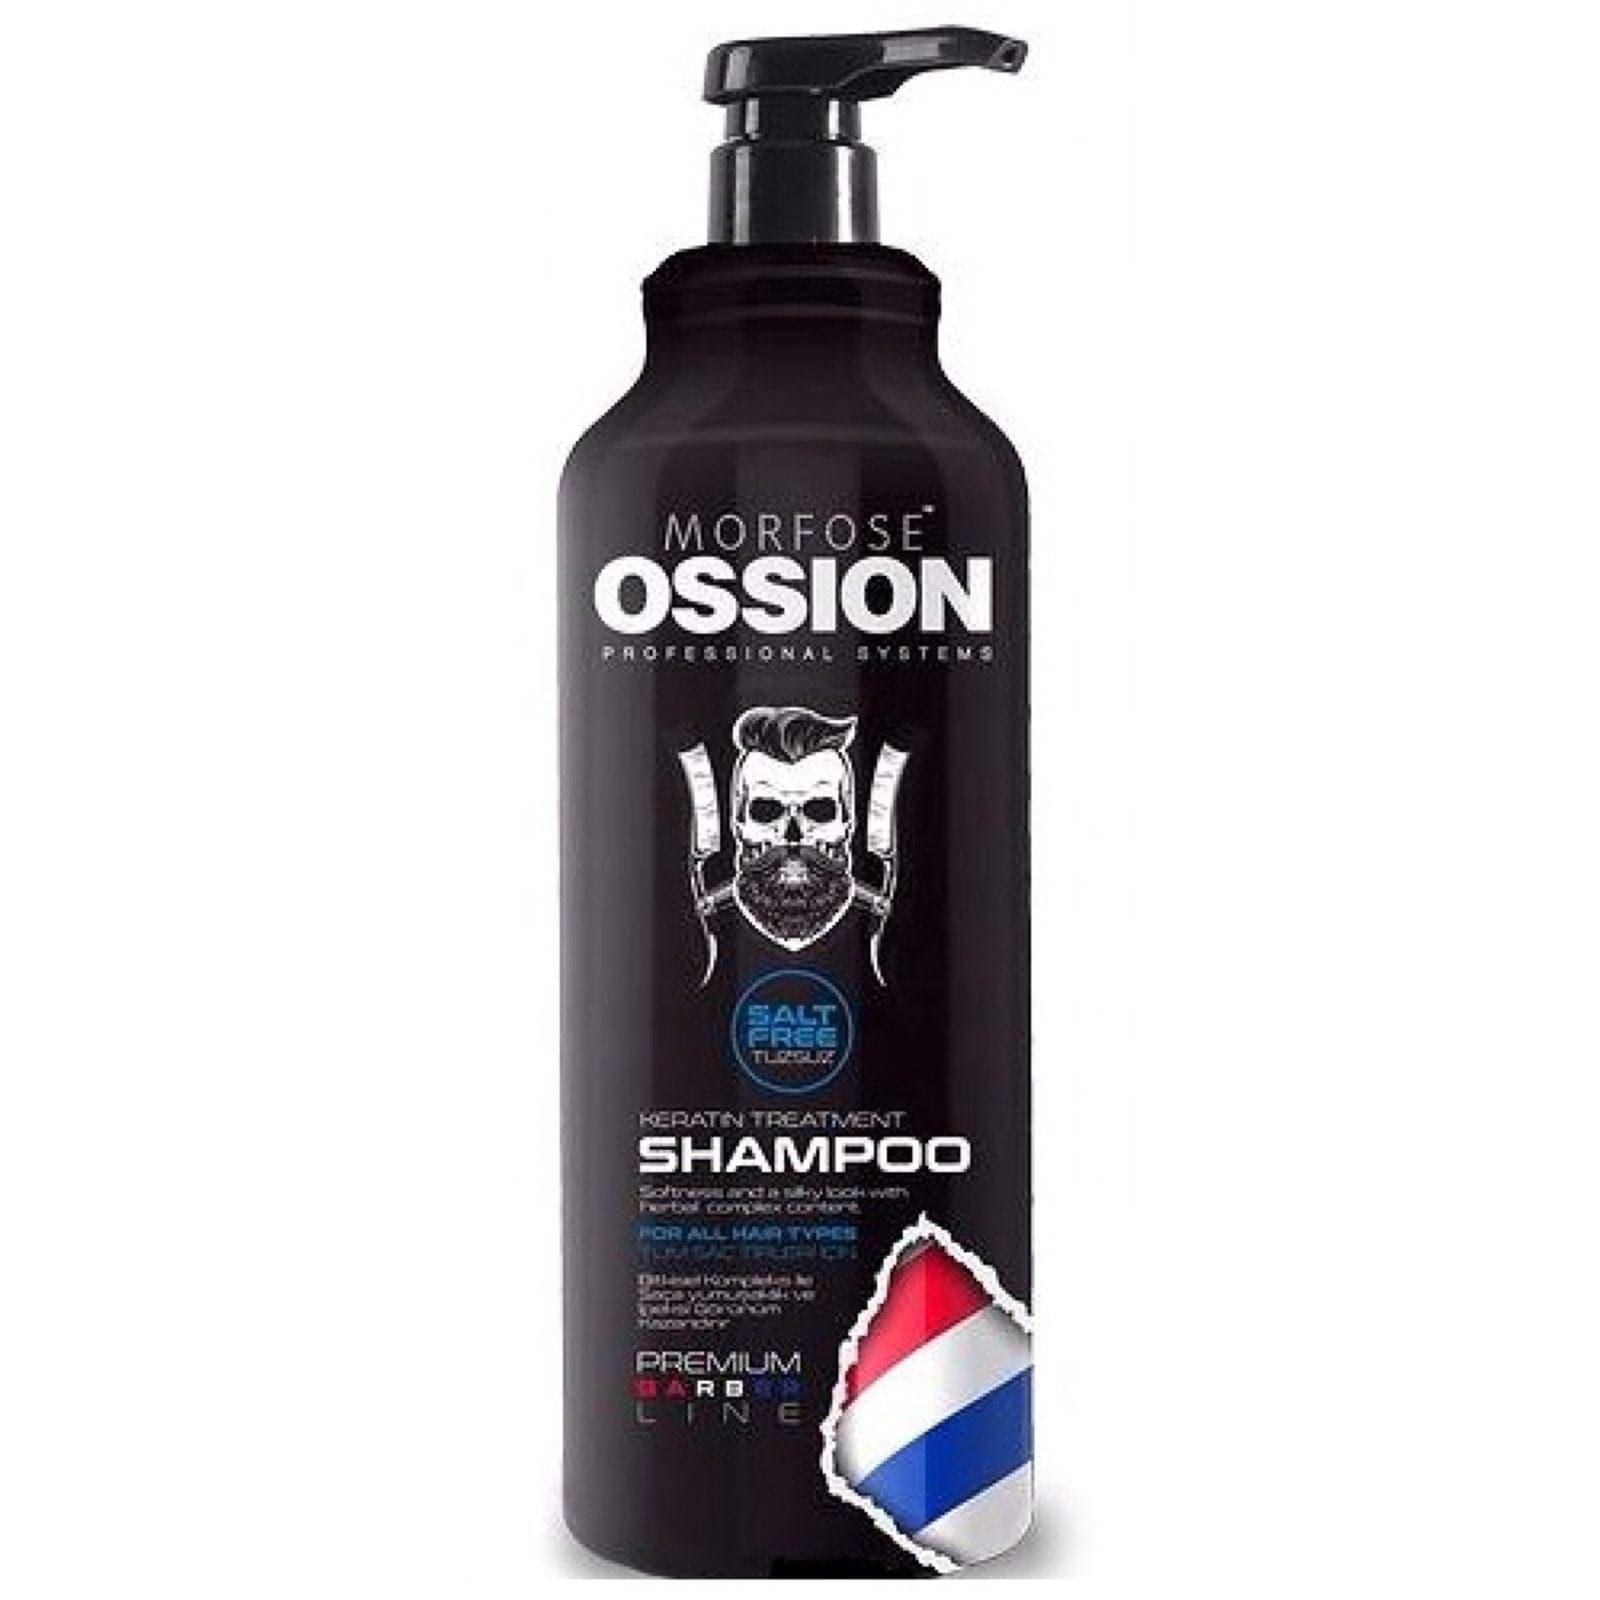 Шампунь barber. Morfose ossion для бороды. Morfose Keratin treatment Shampoo шампунь для волос. Ossion morfose Barber line. Ossion для волос.